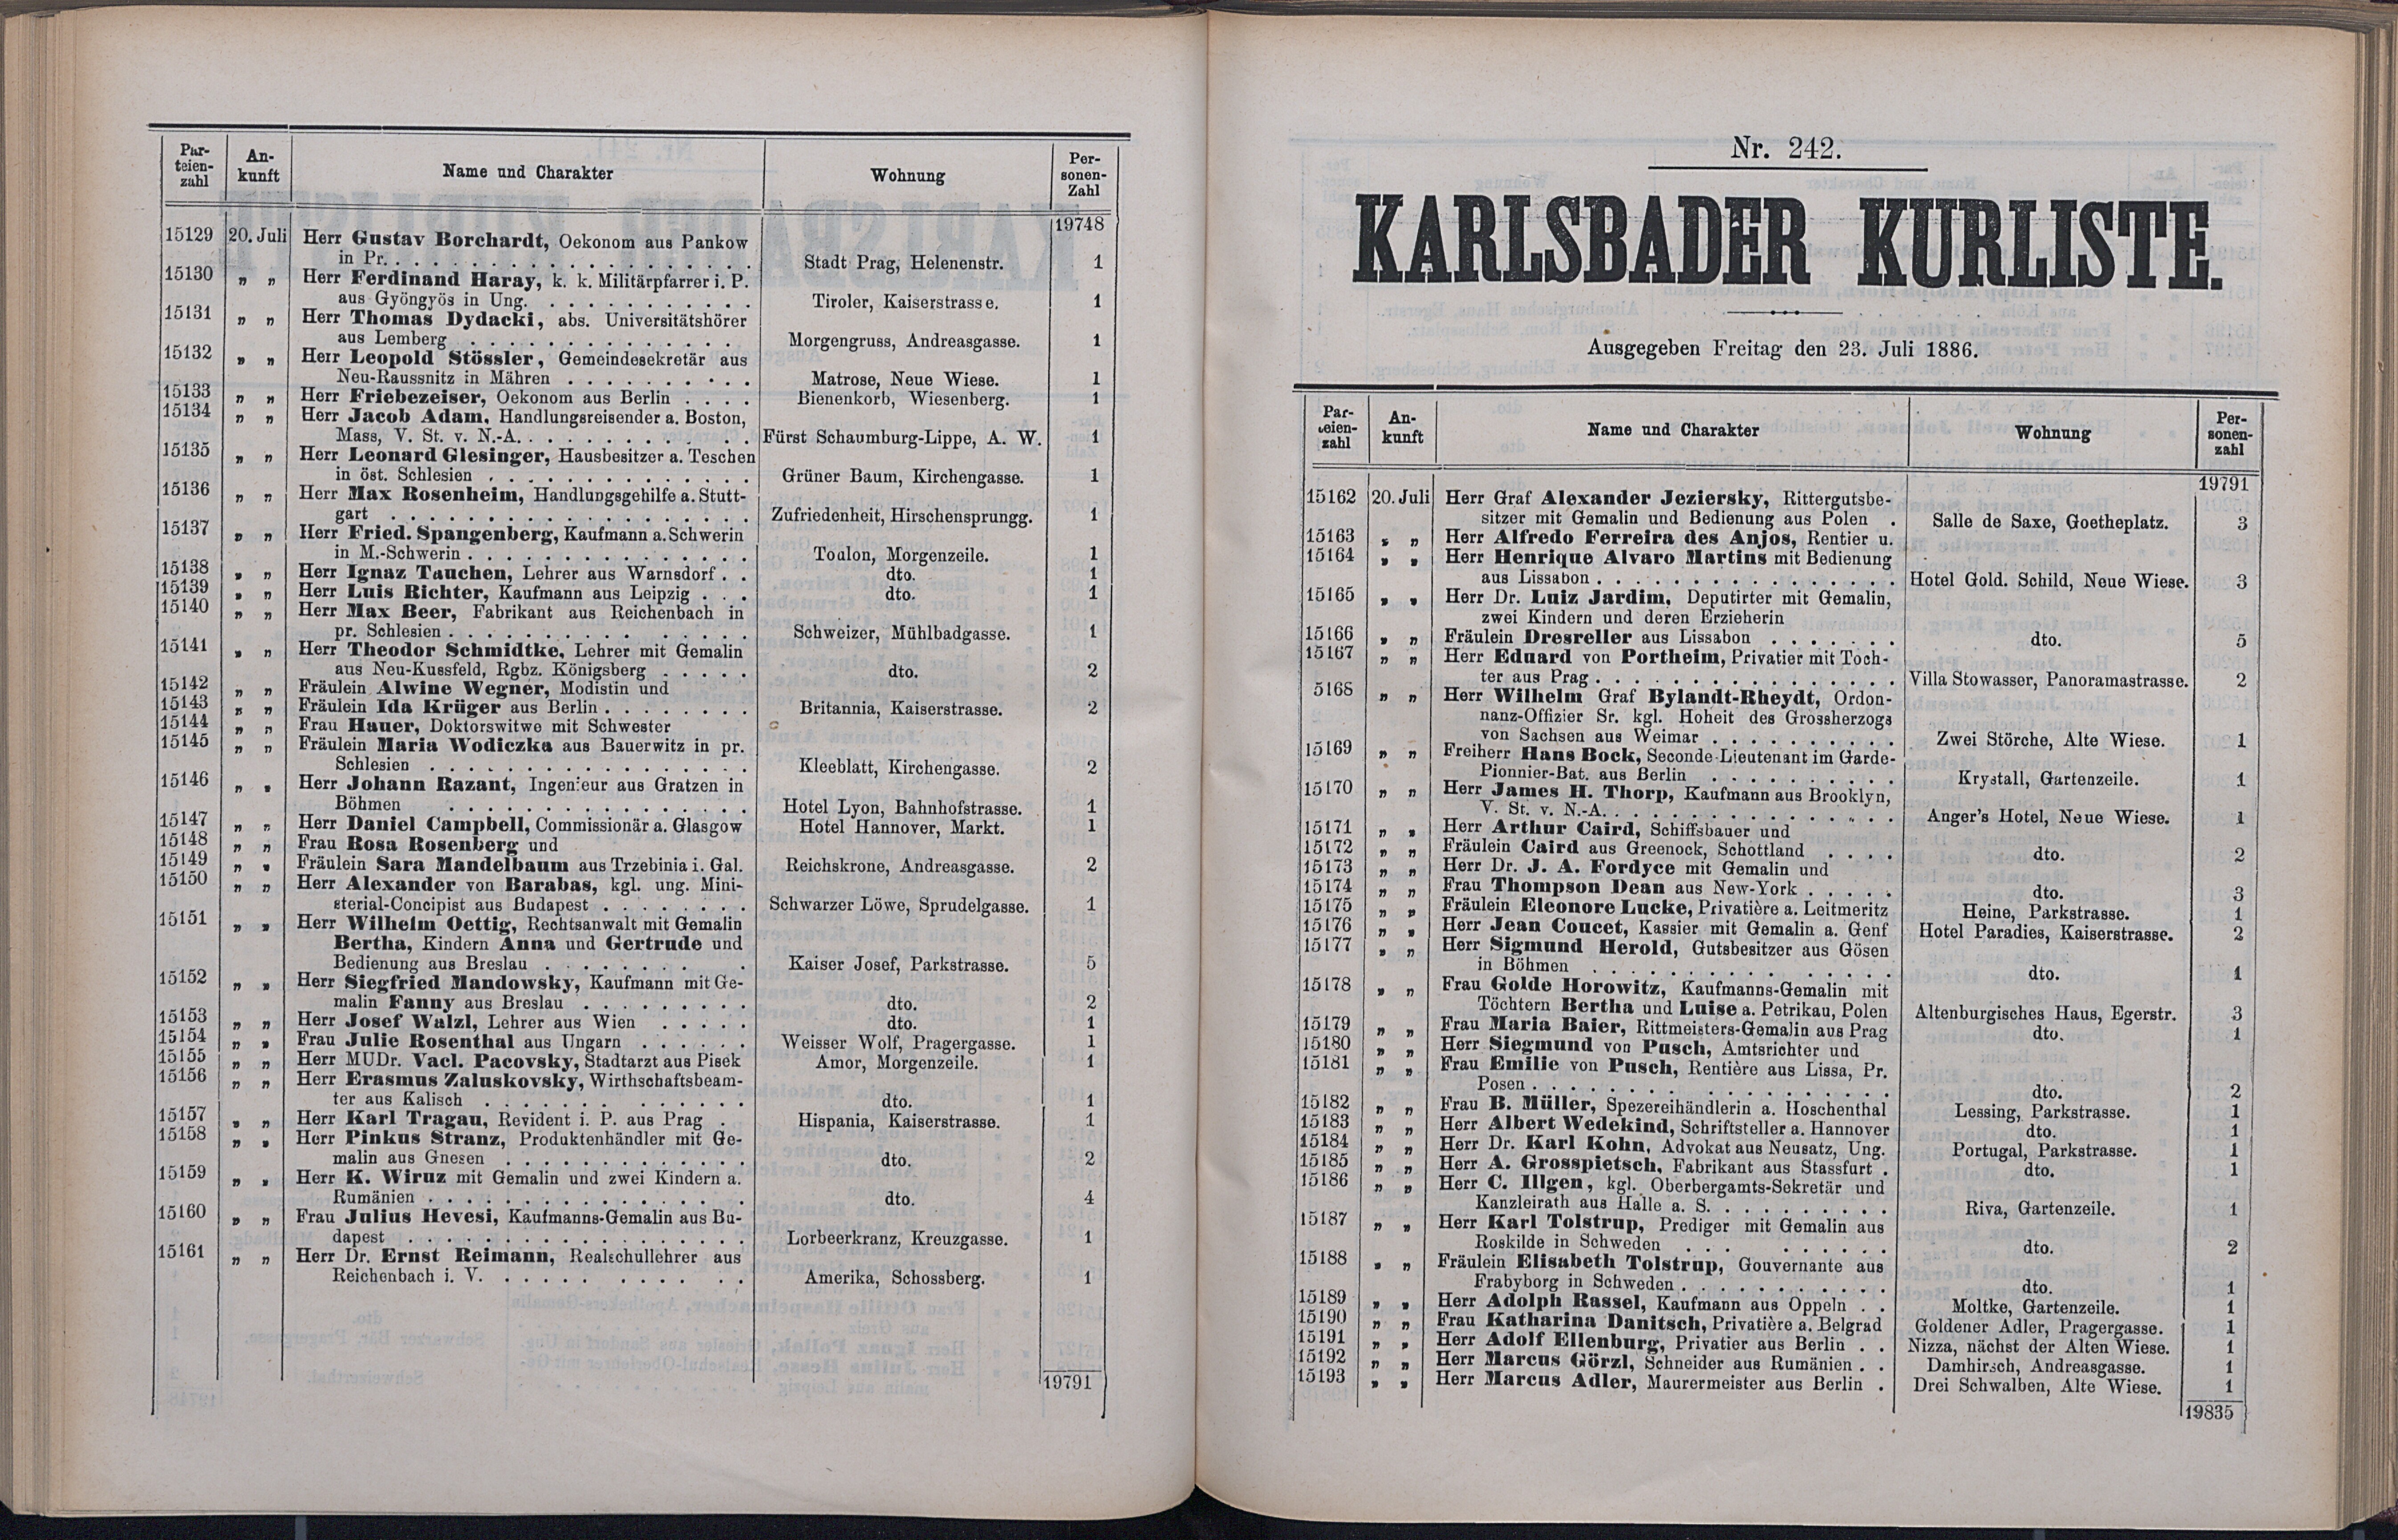 296. soap-kv_knihovna_karlsbader-kurliste-1886_2970